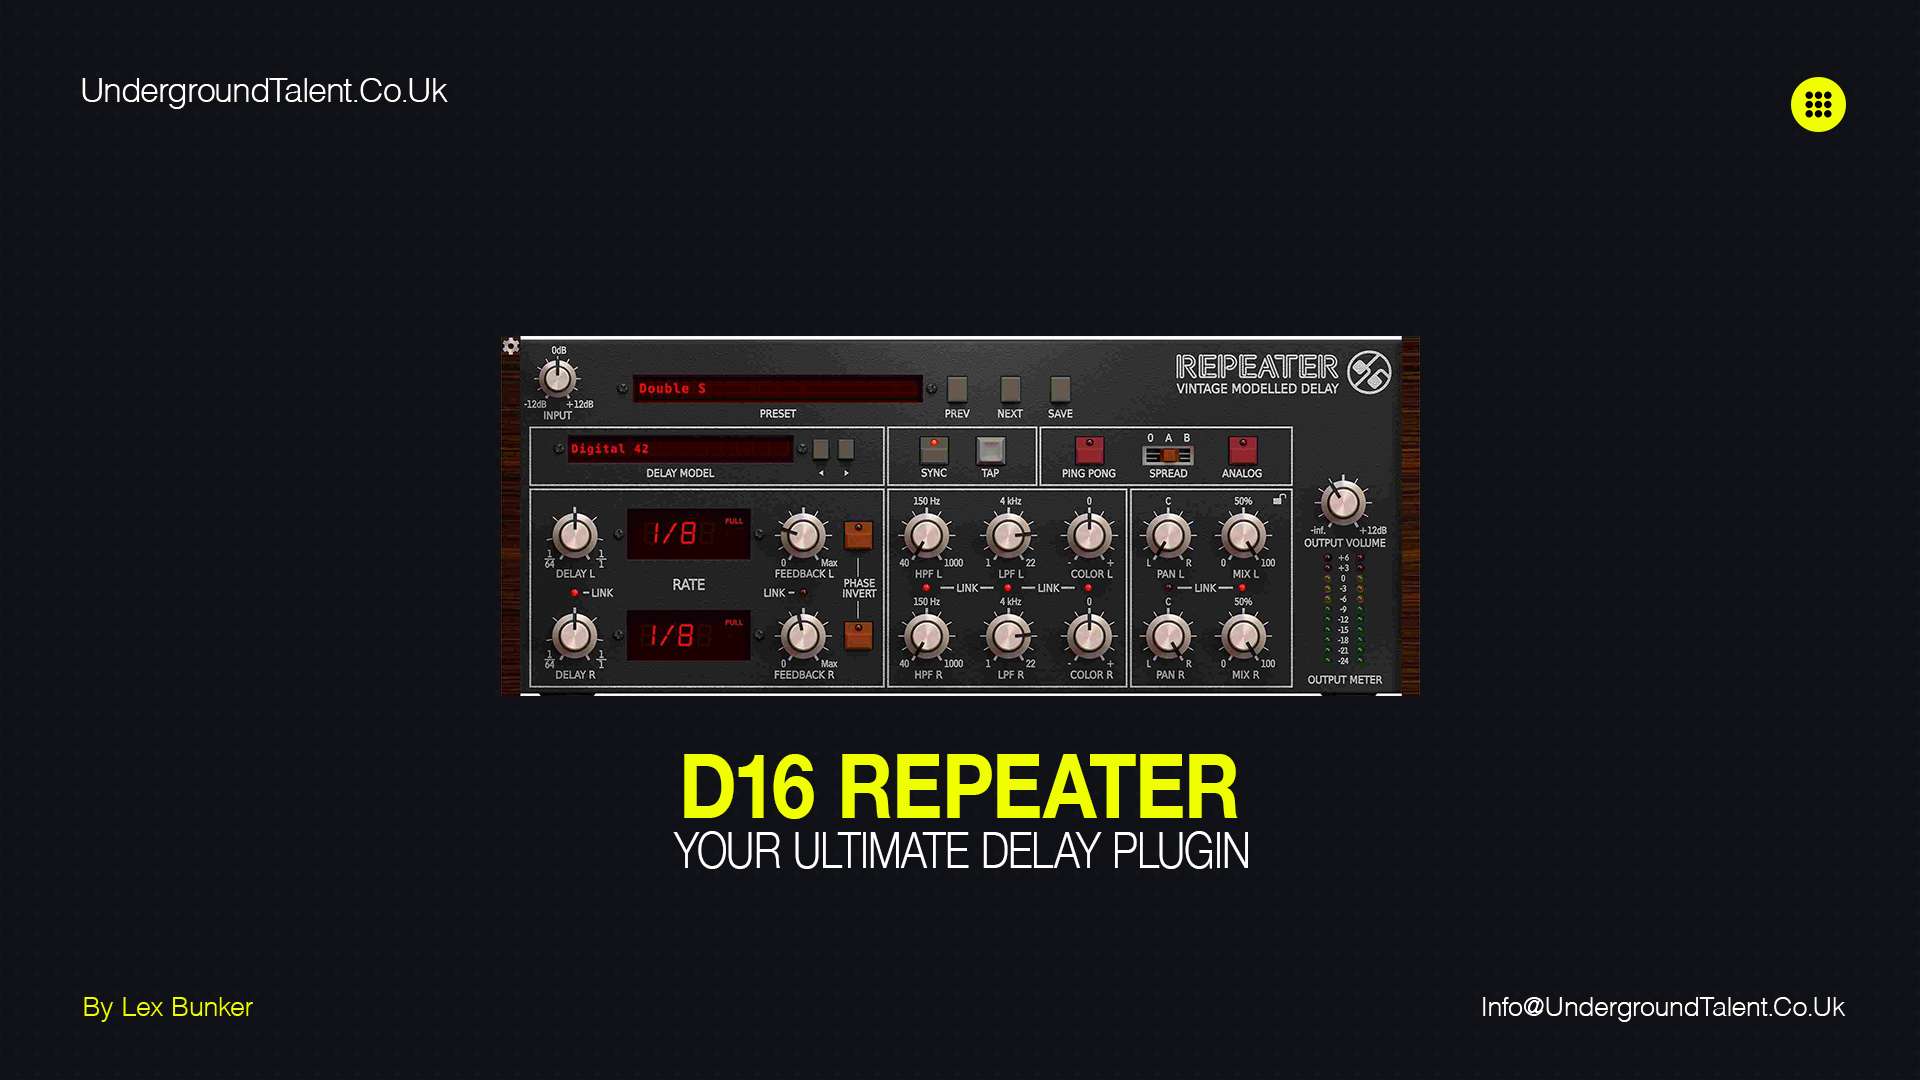 D16 Repeater: The Ultimate Delay Plugin